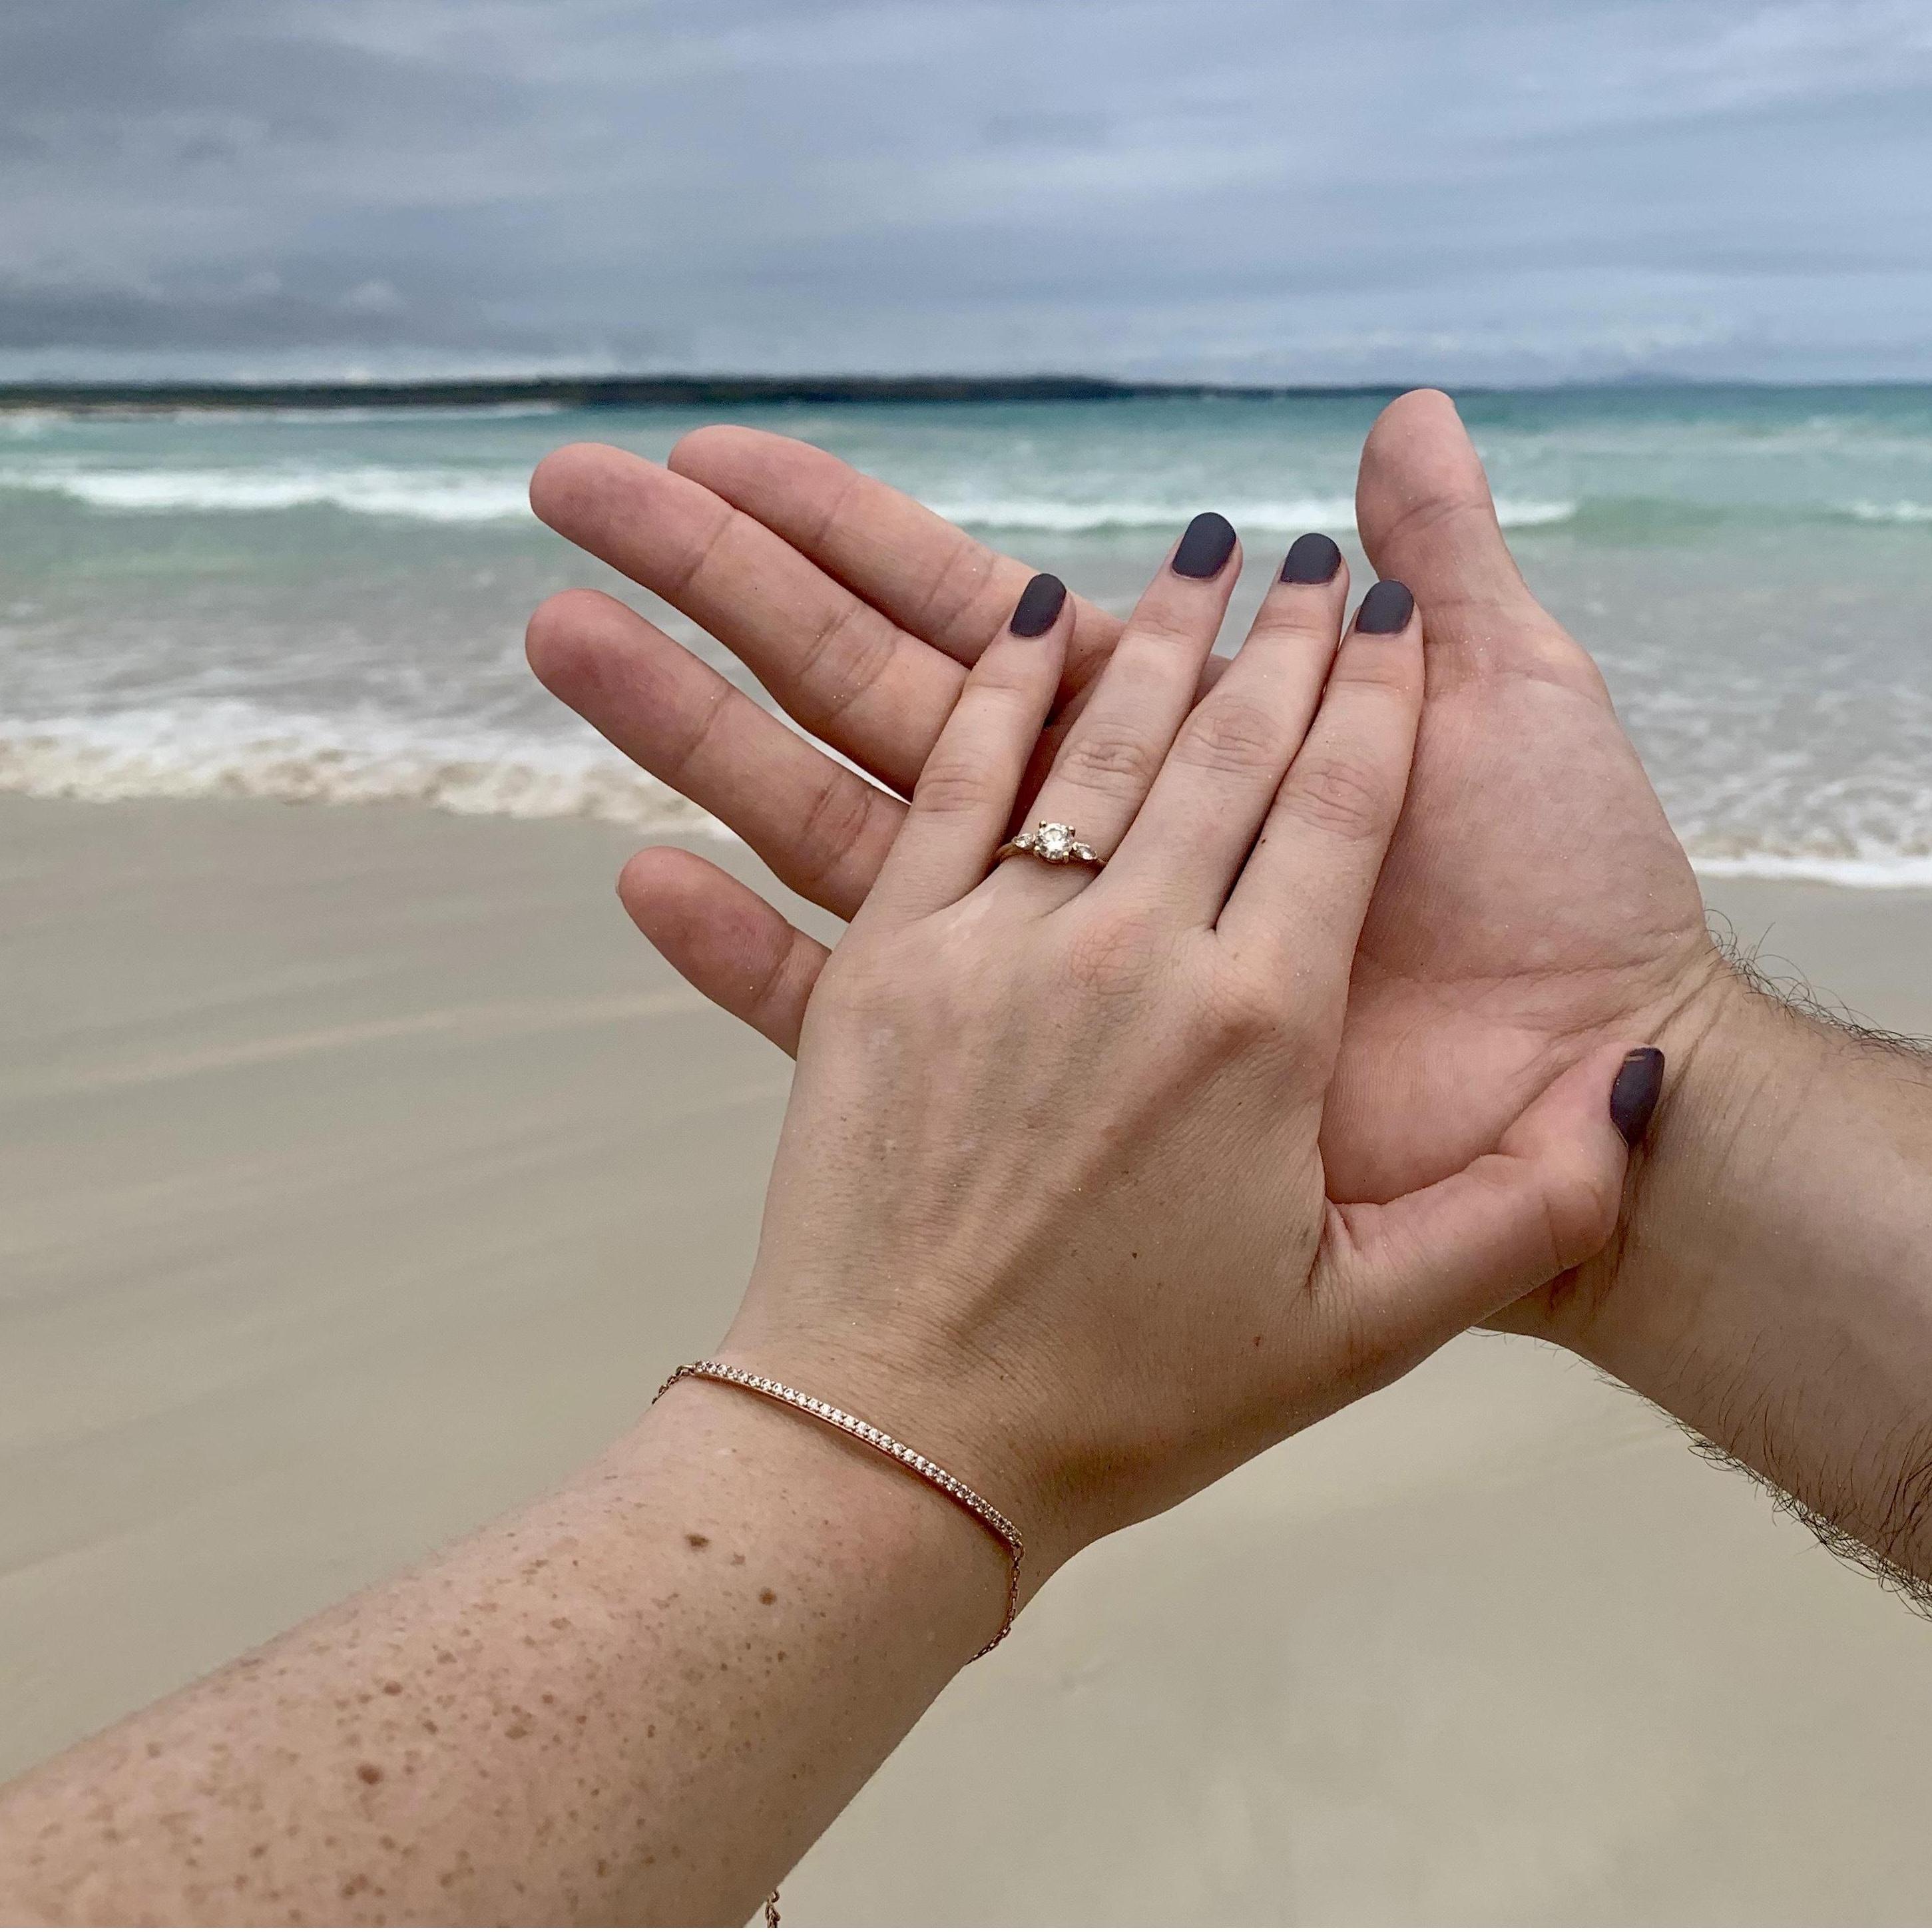 Engagement trip. Galapagos Islands